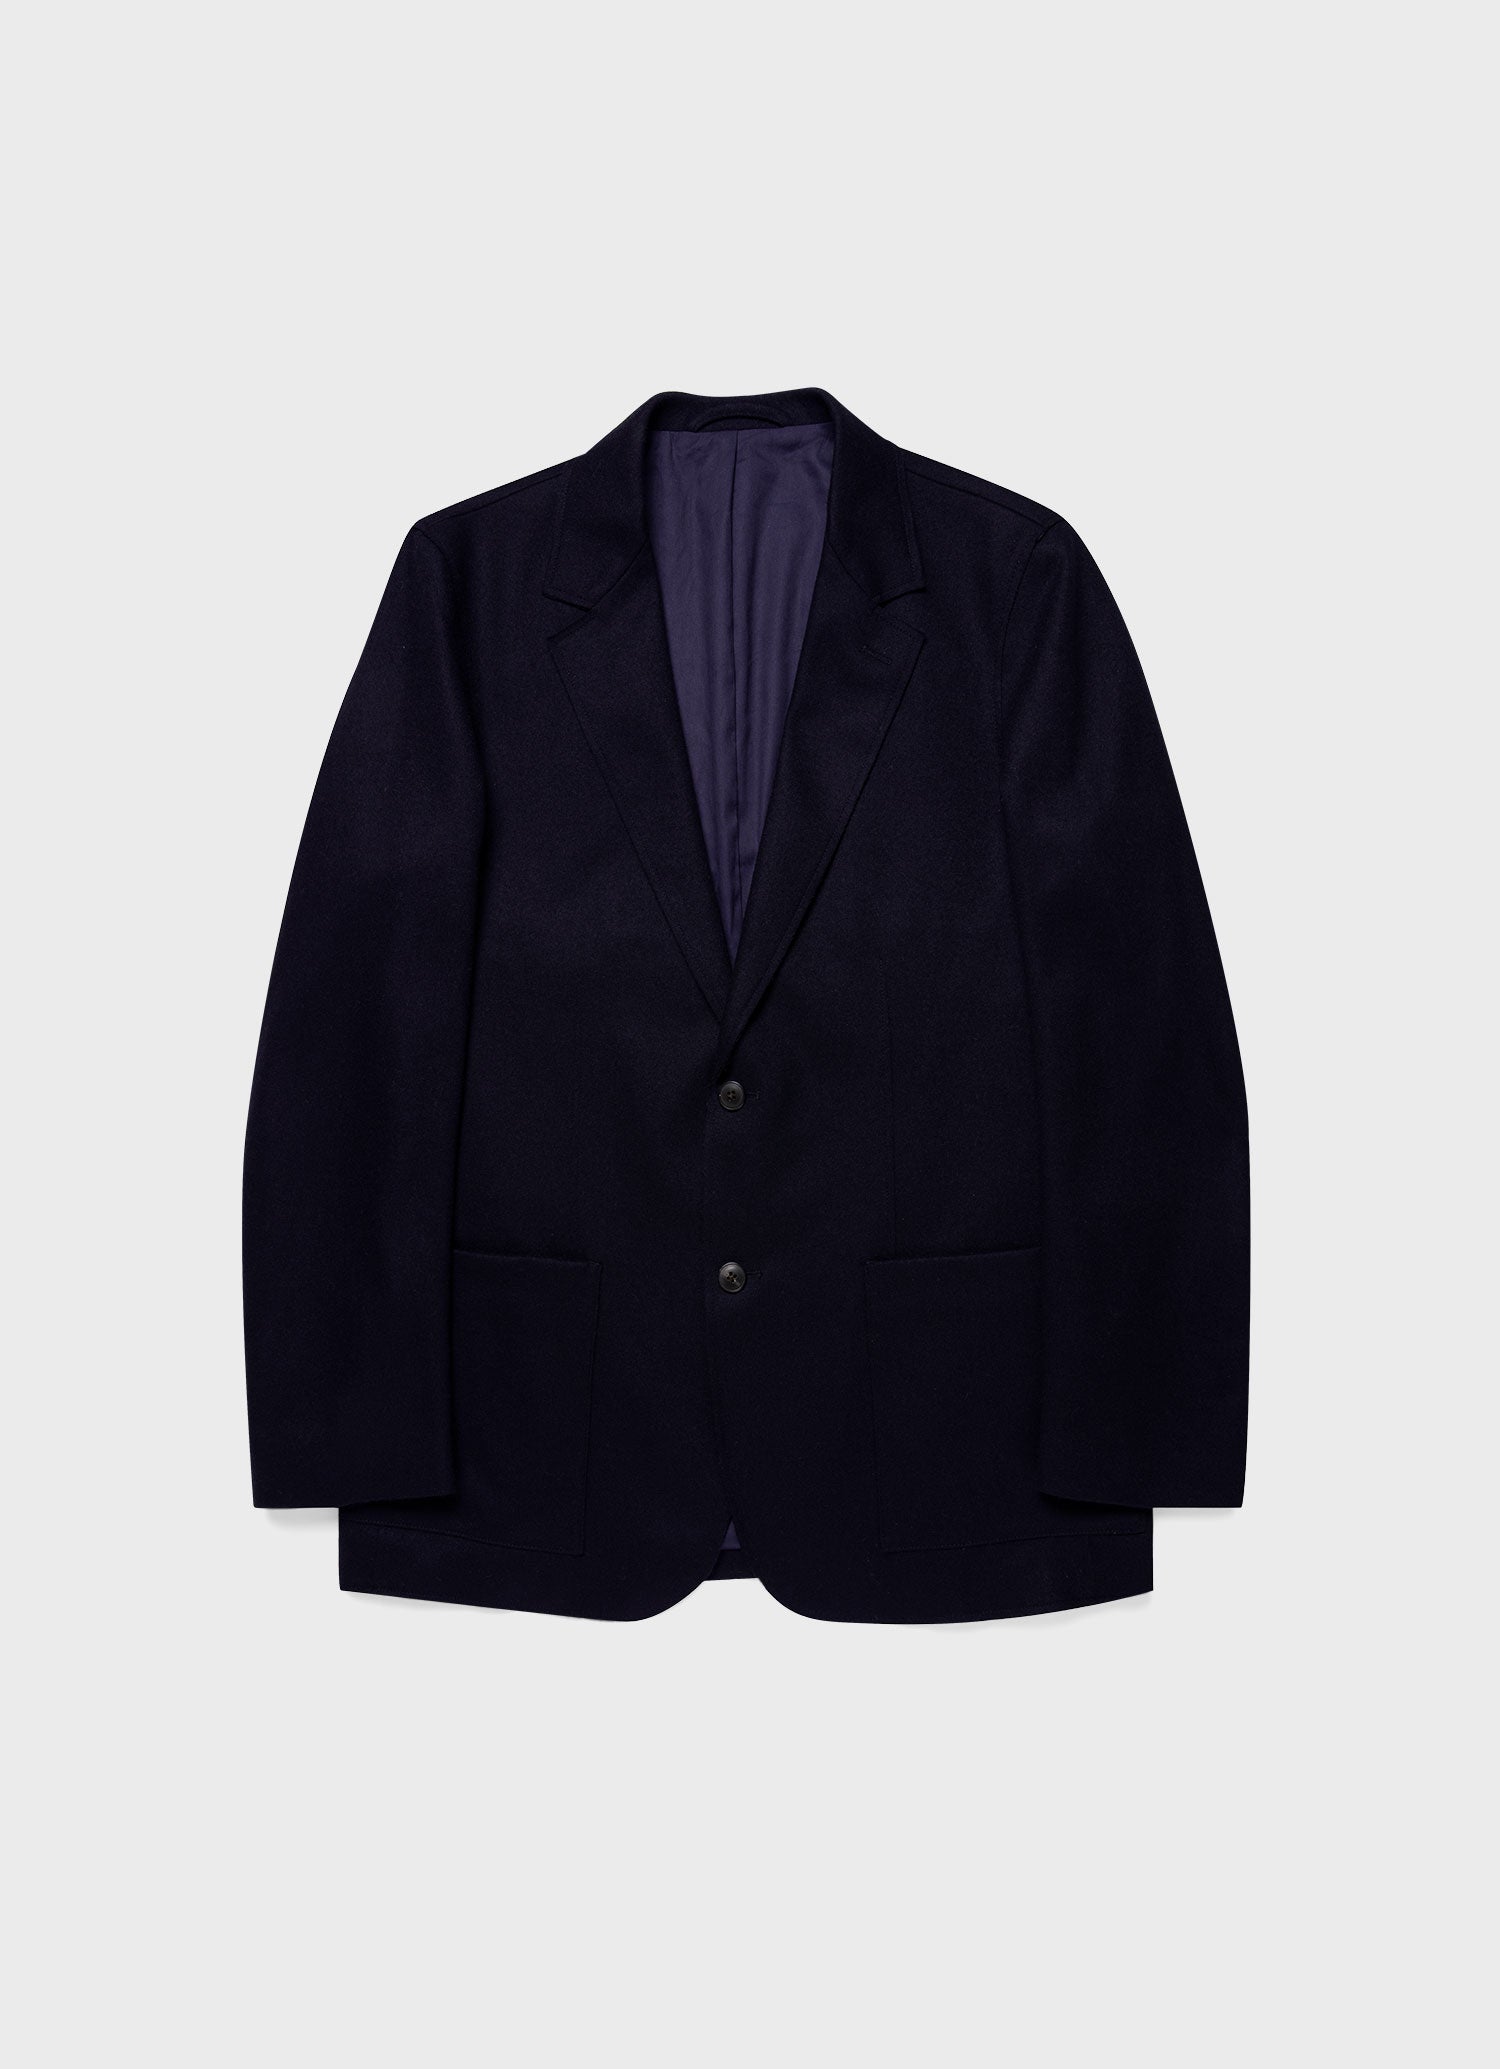 Men's Sunspel x Casely-Hayford Suit Jacket in Navy